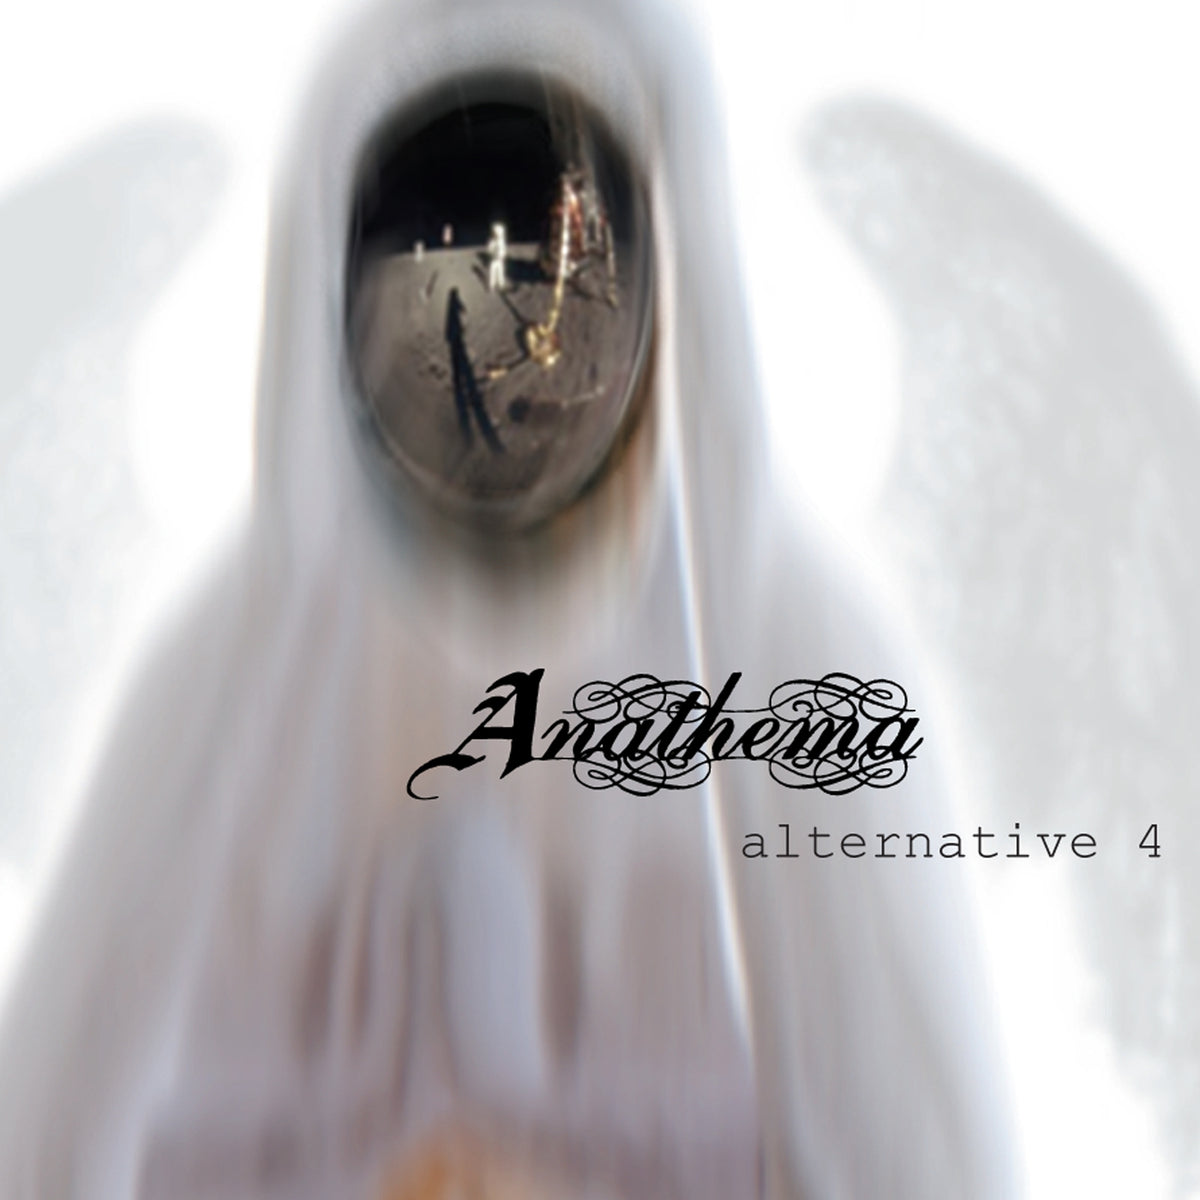 Anathema - Alternative 4 (25th Anniversary) - VILELP1091